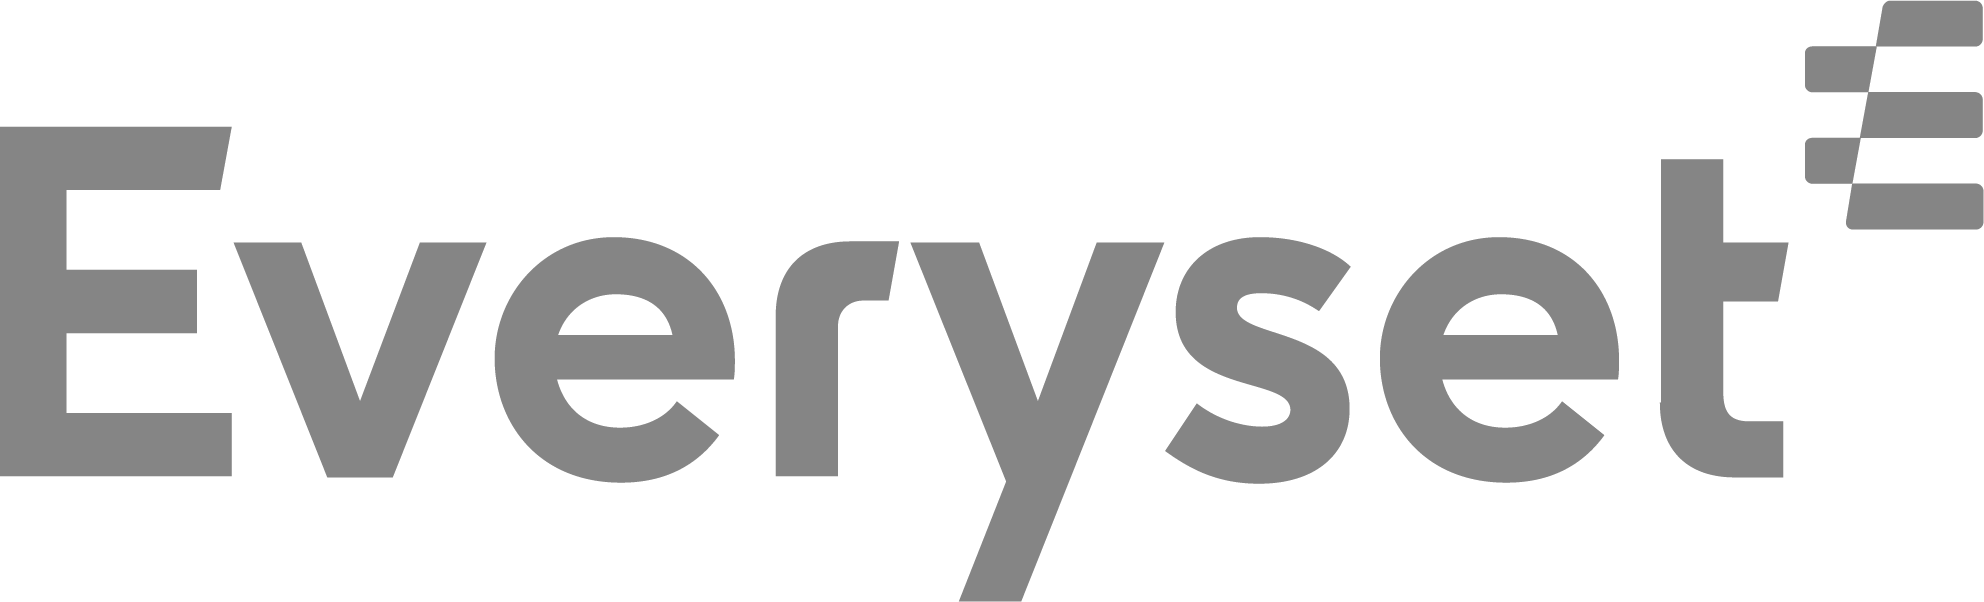 Everyset New Logo Grey